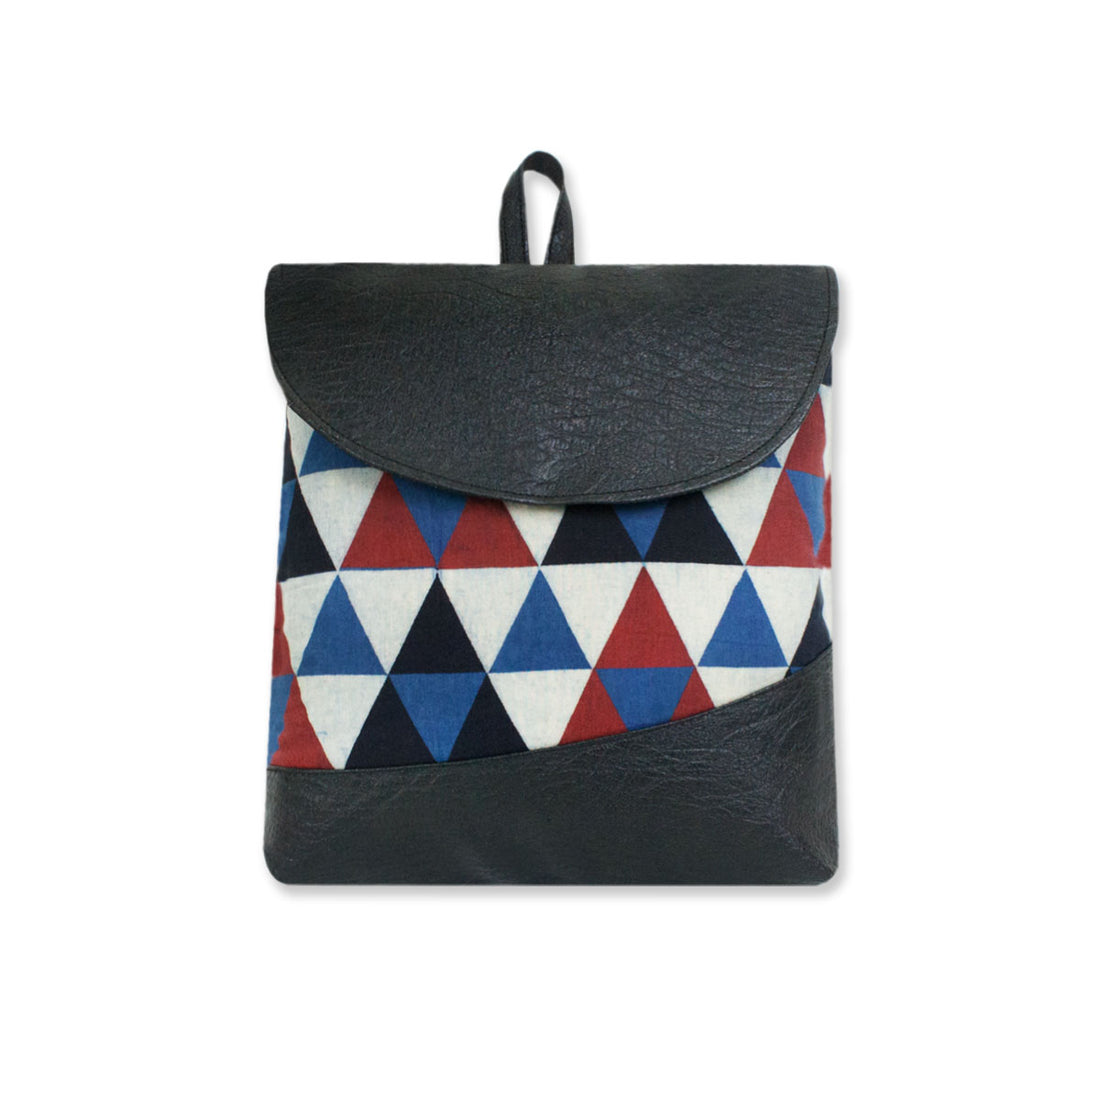 Triangles Block-printed Backpack